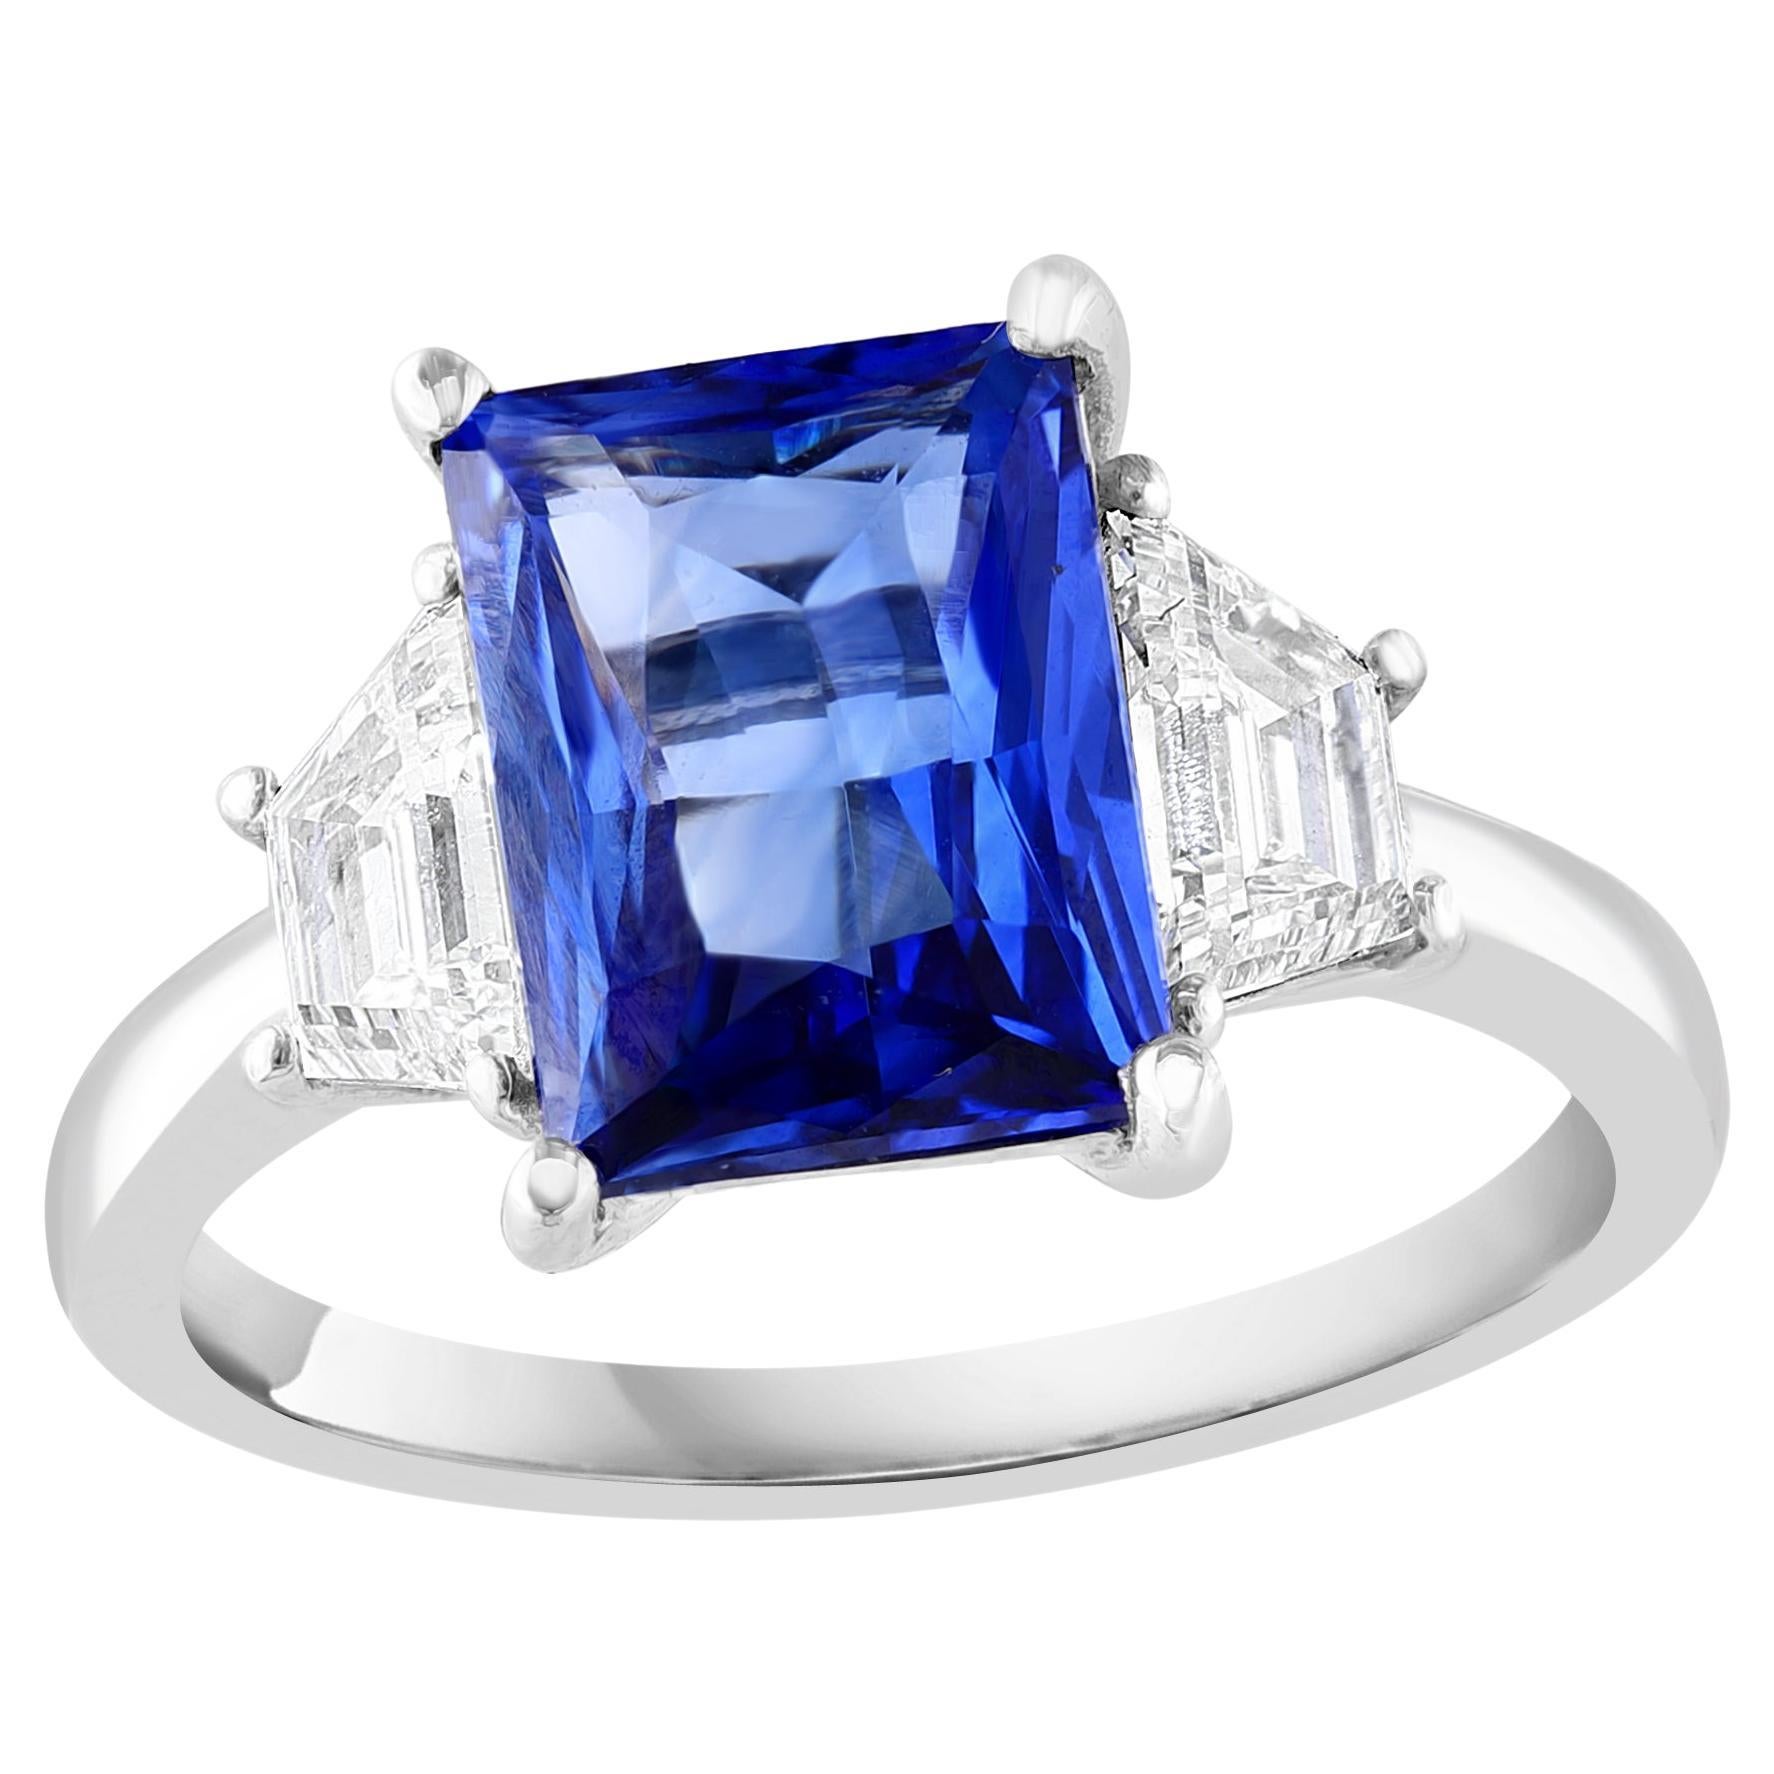 3.06 Carat Emerald Cut Blue Sapphire Diamond 3-Stone Engagement Ring in Platinum